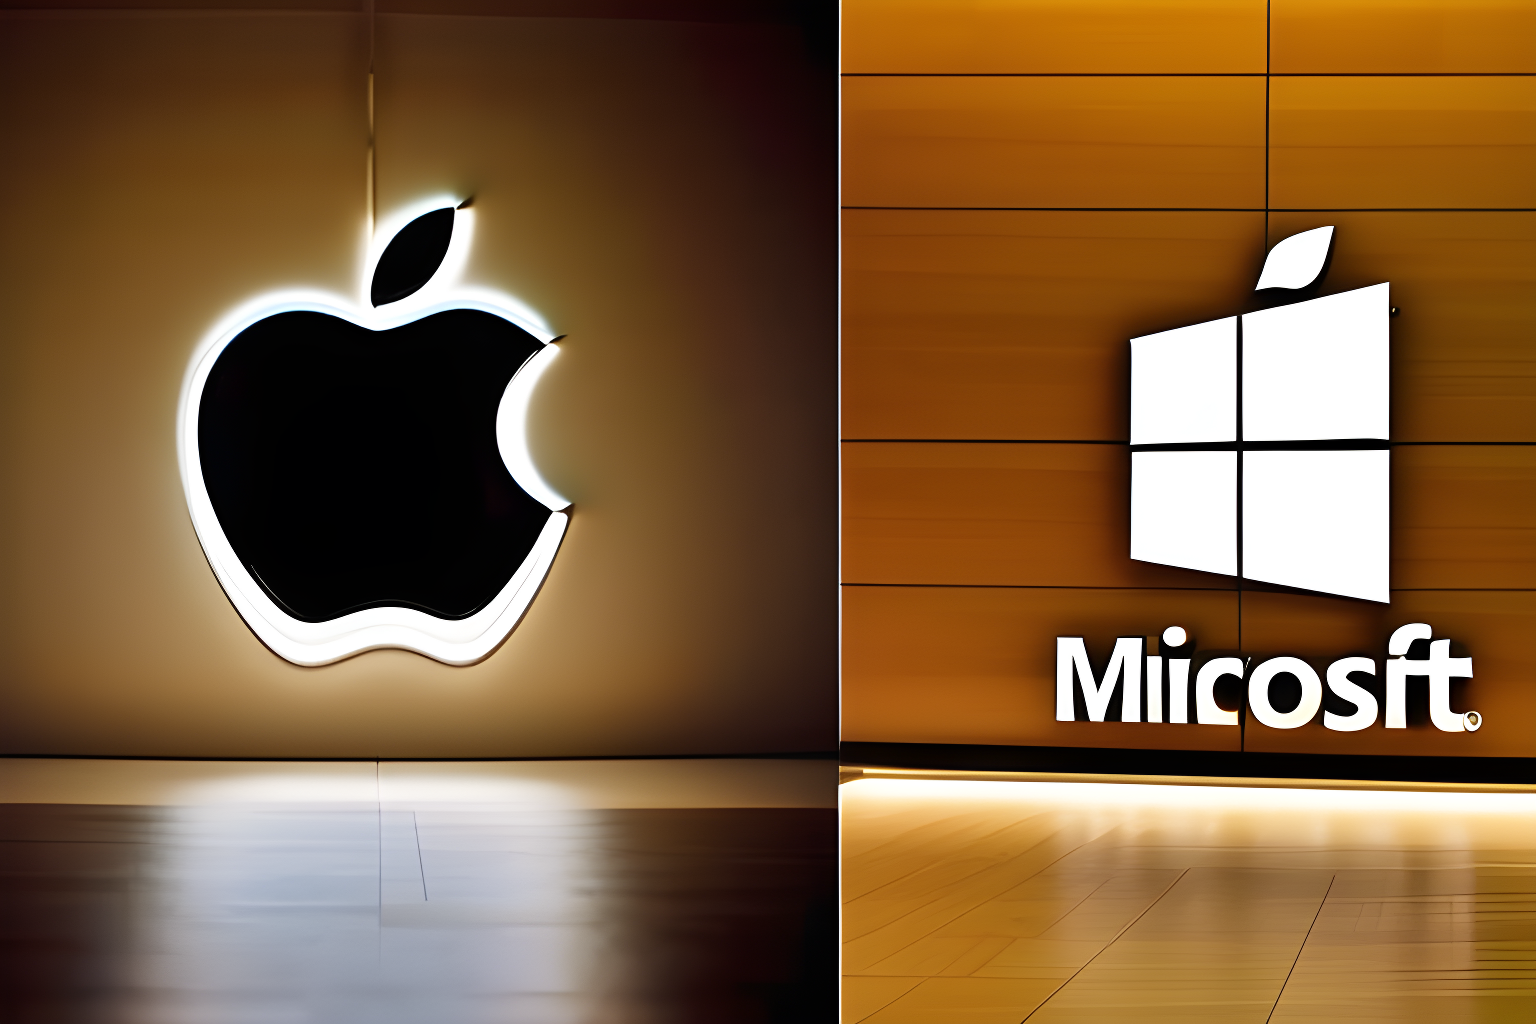 Clear apple logo vs a clear logo of microsoft